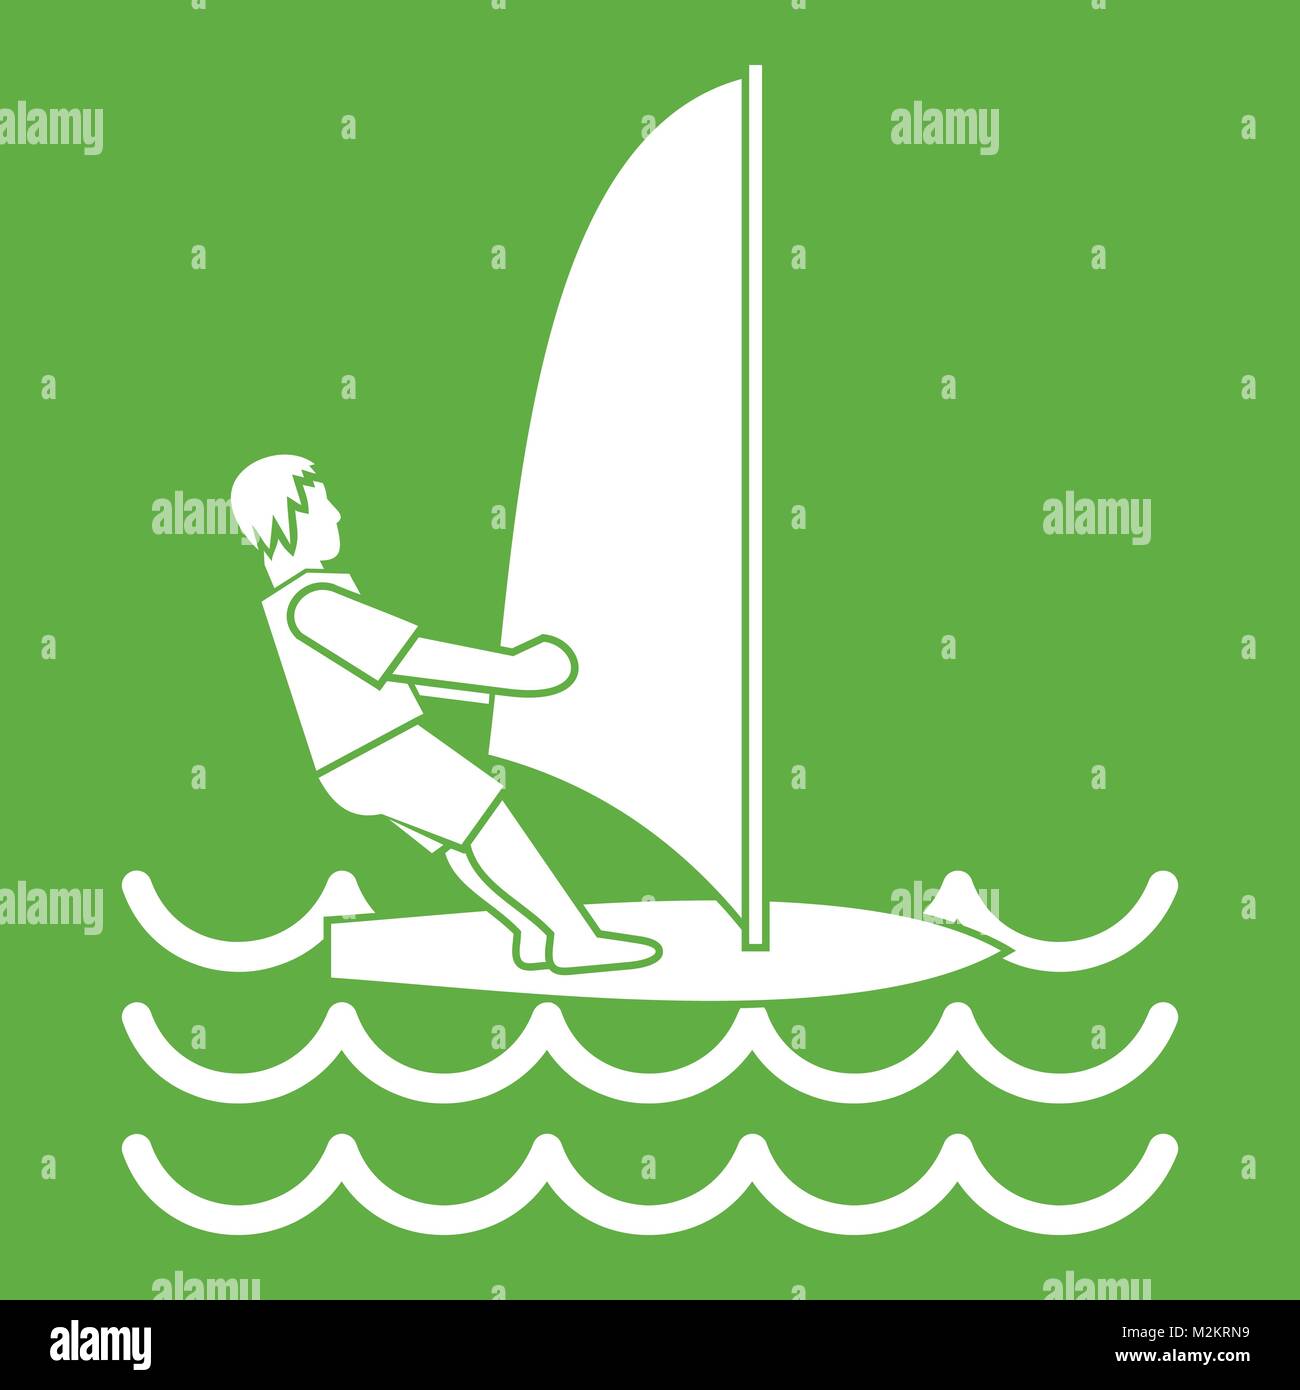 Man on windsurf icon green Stock Vector